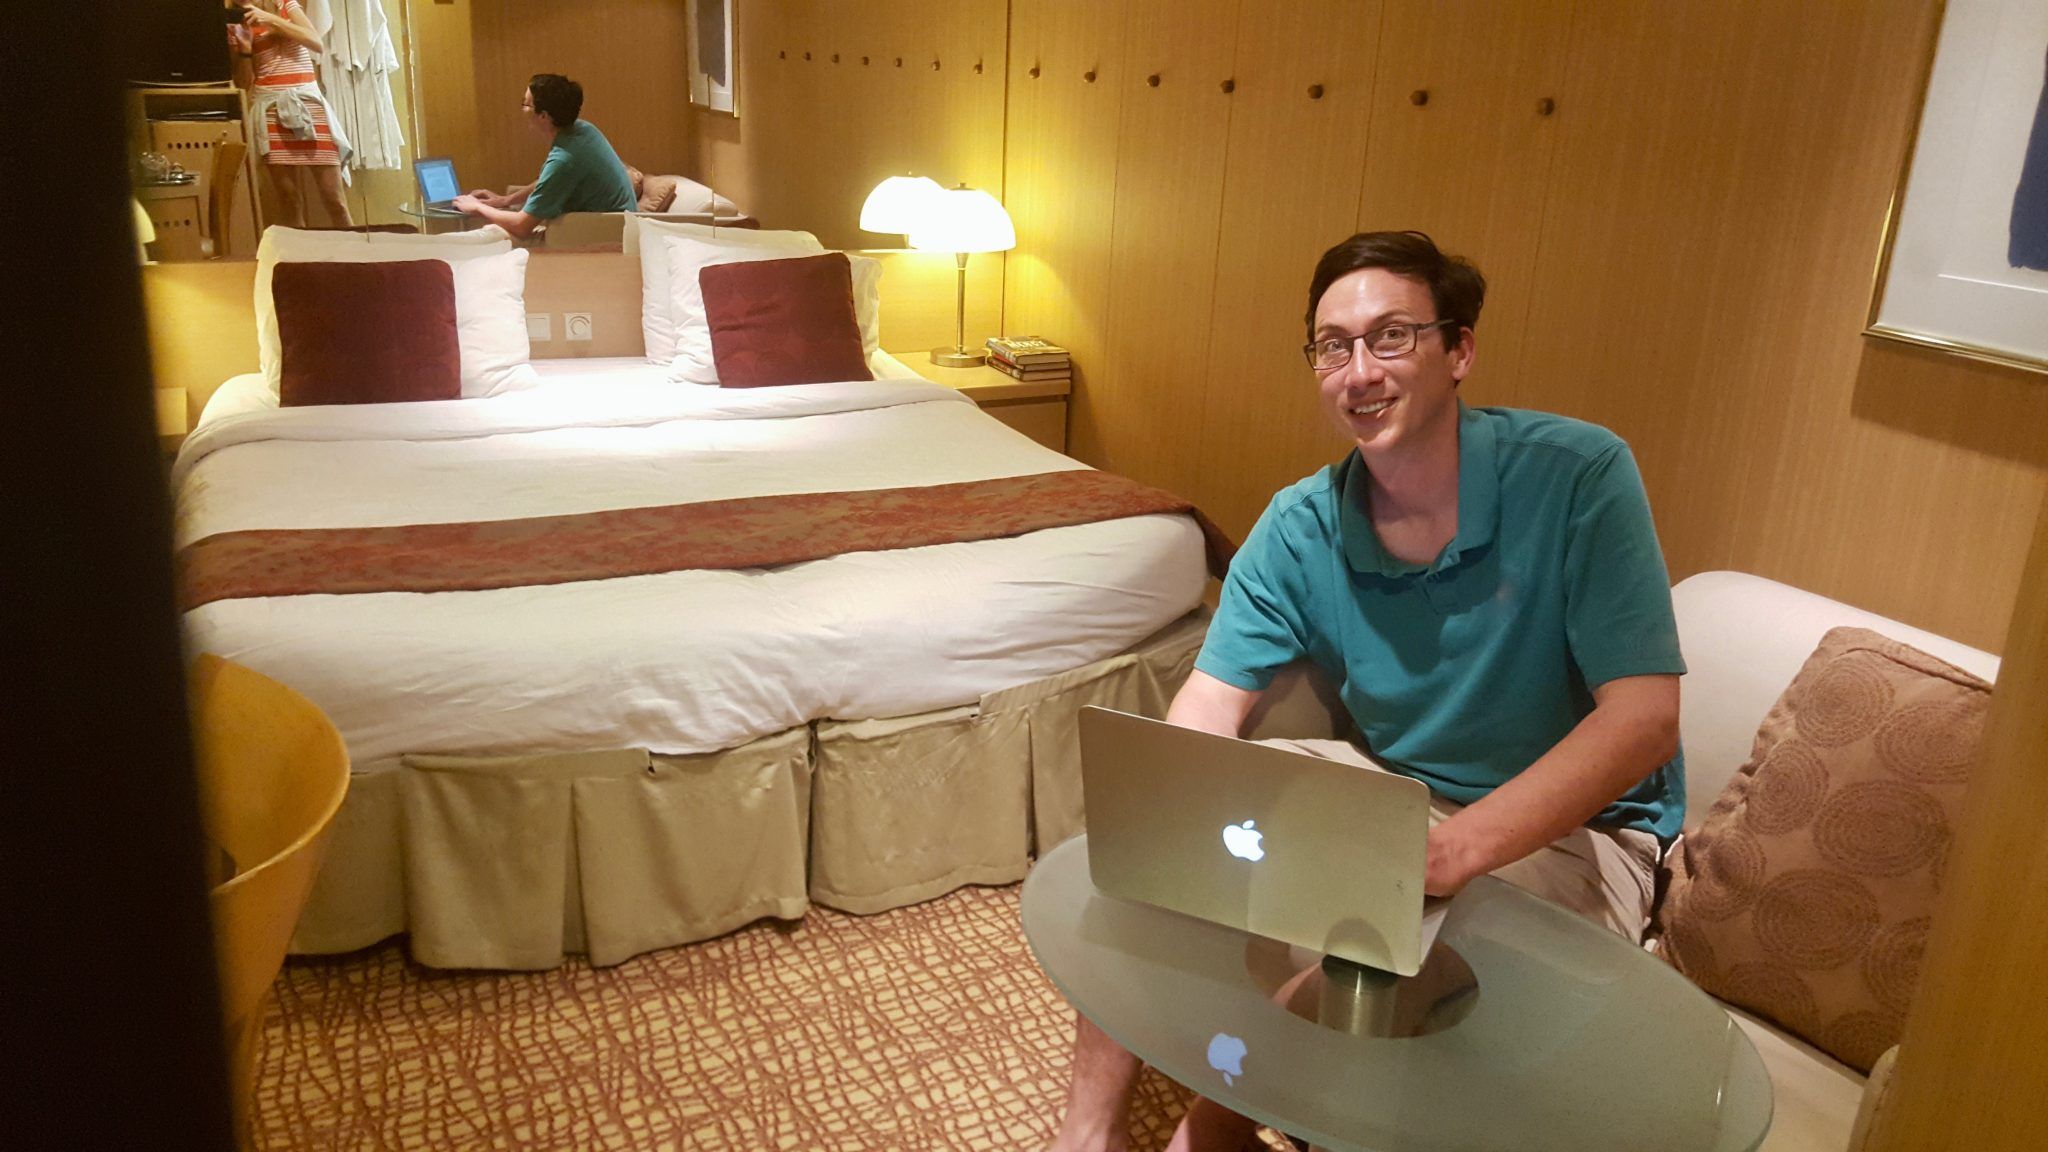 Man using macbook in hotel room.